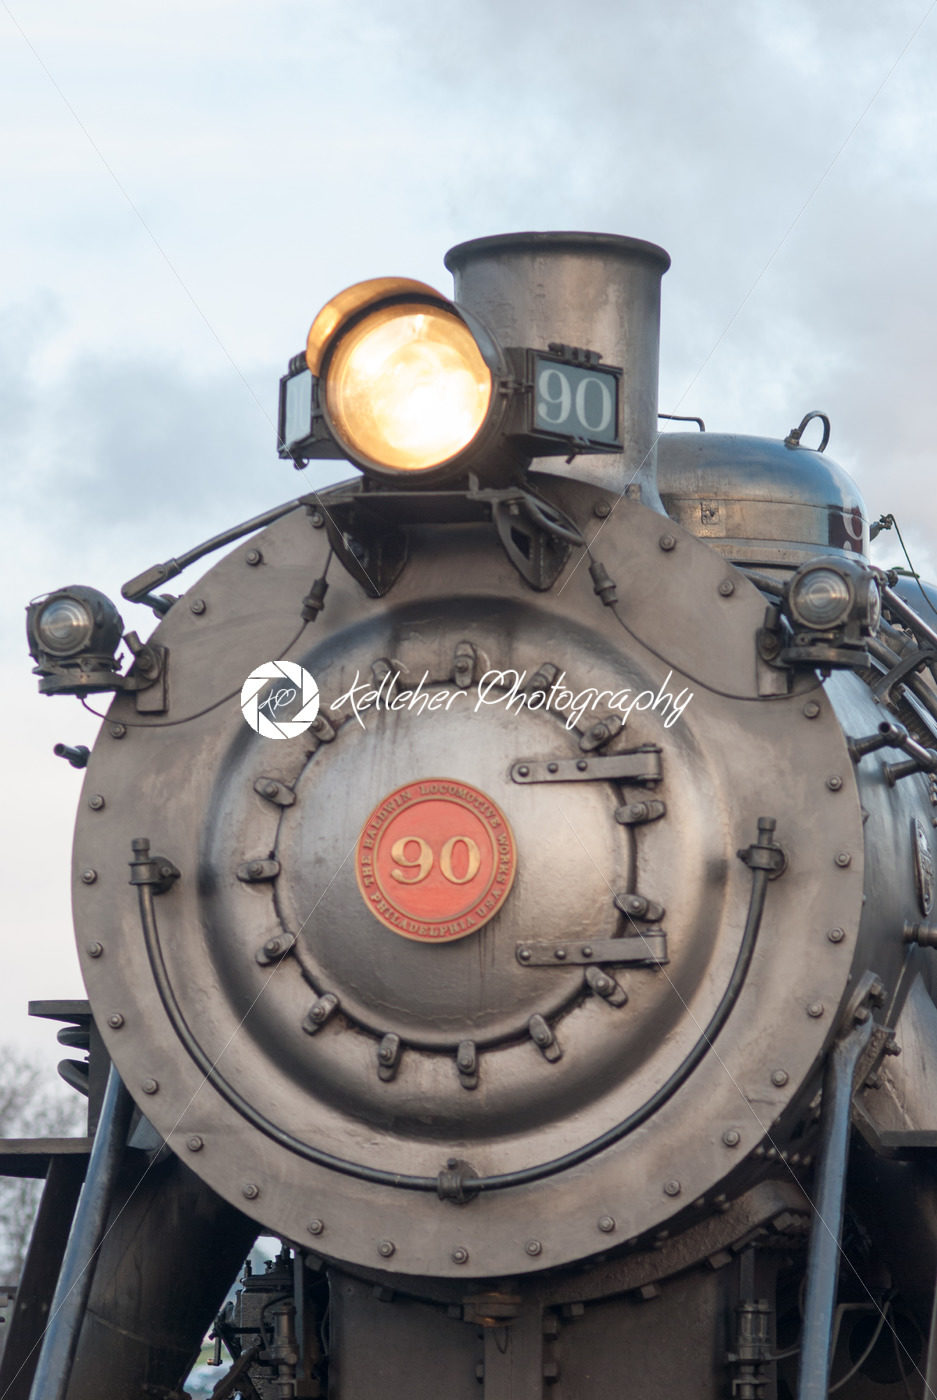 STRASBURG, PA – DECEMBER 15: Steam Locomotive in Strasburg, Pennsylvania on December 15, 2012 - Kelleher Photography Store